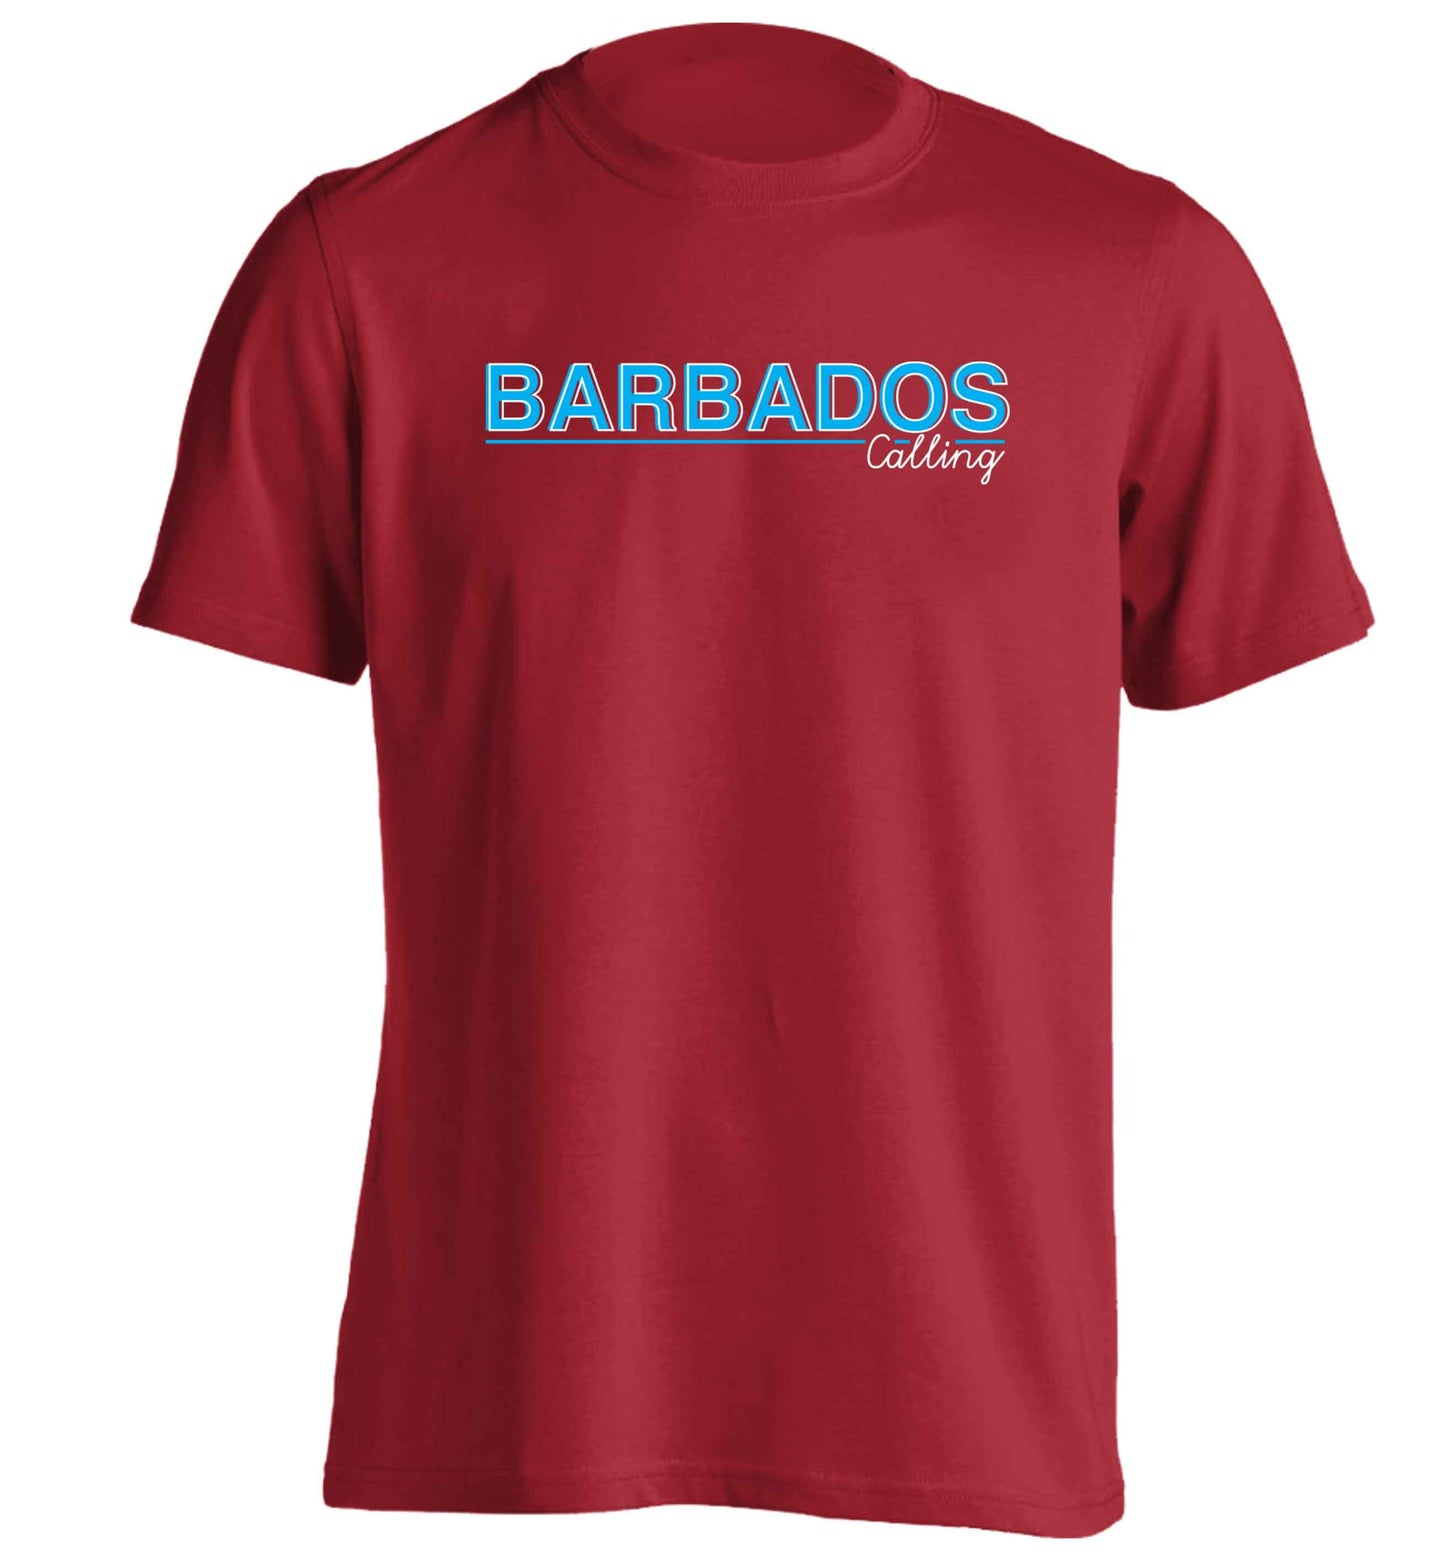 Barbados calling adults unisex red Tshirt 2XL